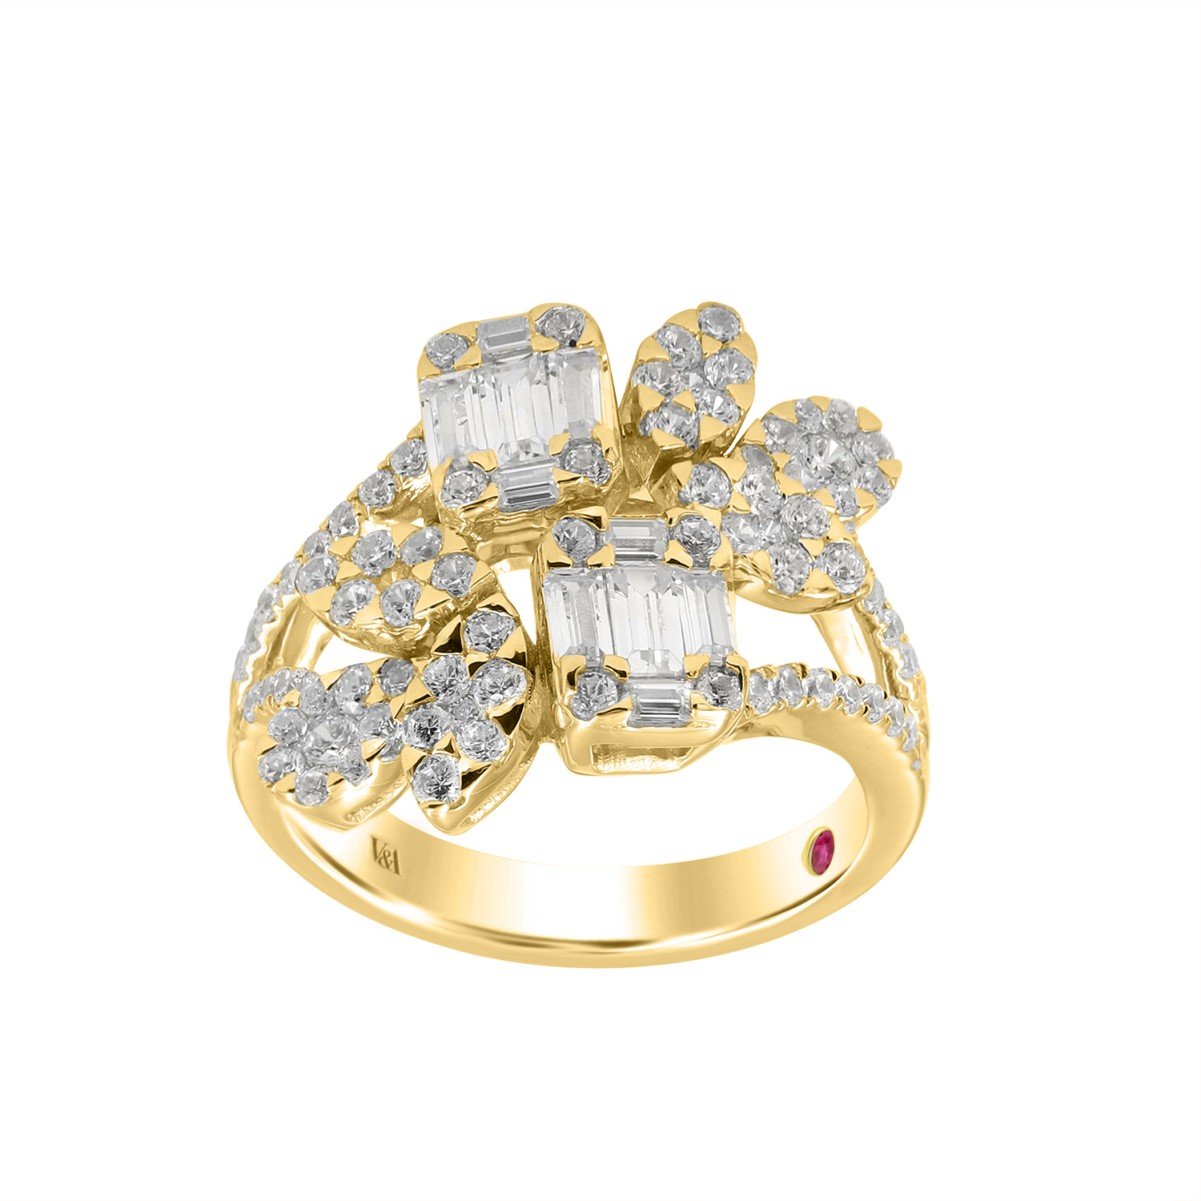 14K YELLOW GOLD 1 1/2CT ROUND/BAGUETTE DIAMOND LADIES FASHION RING